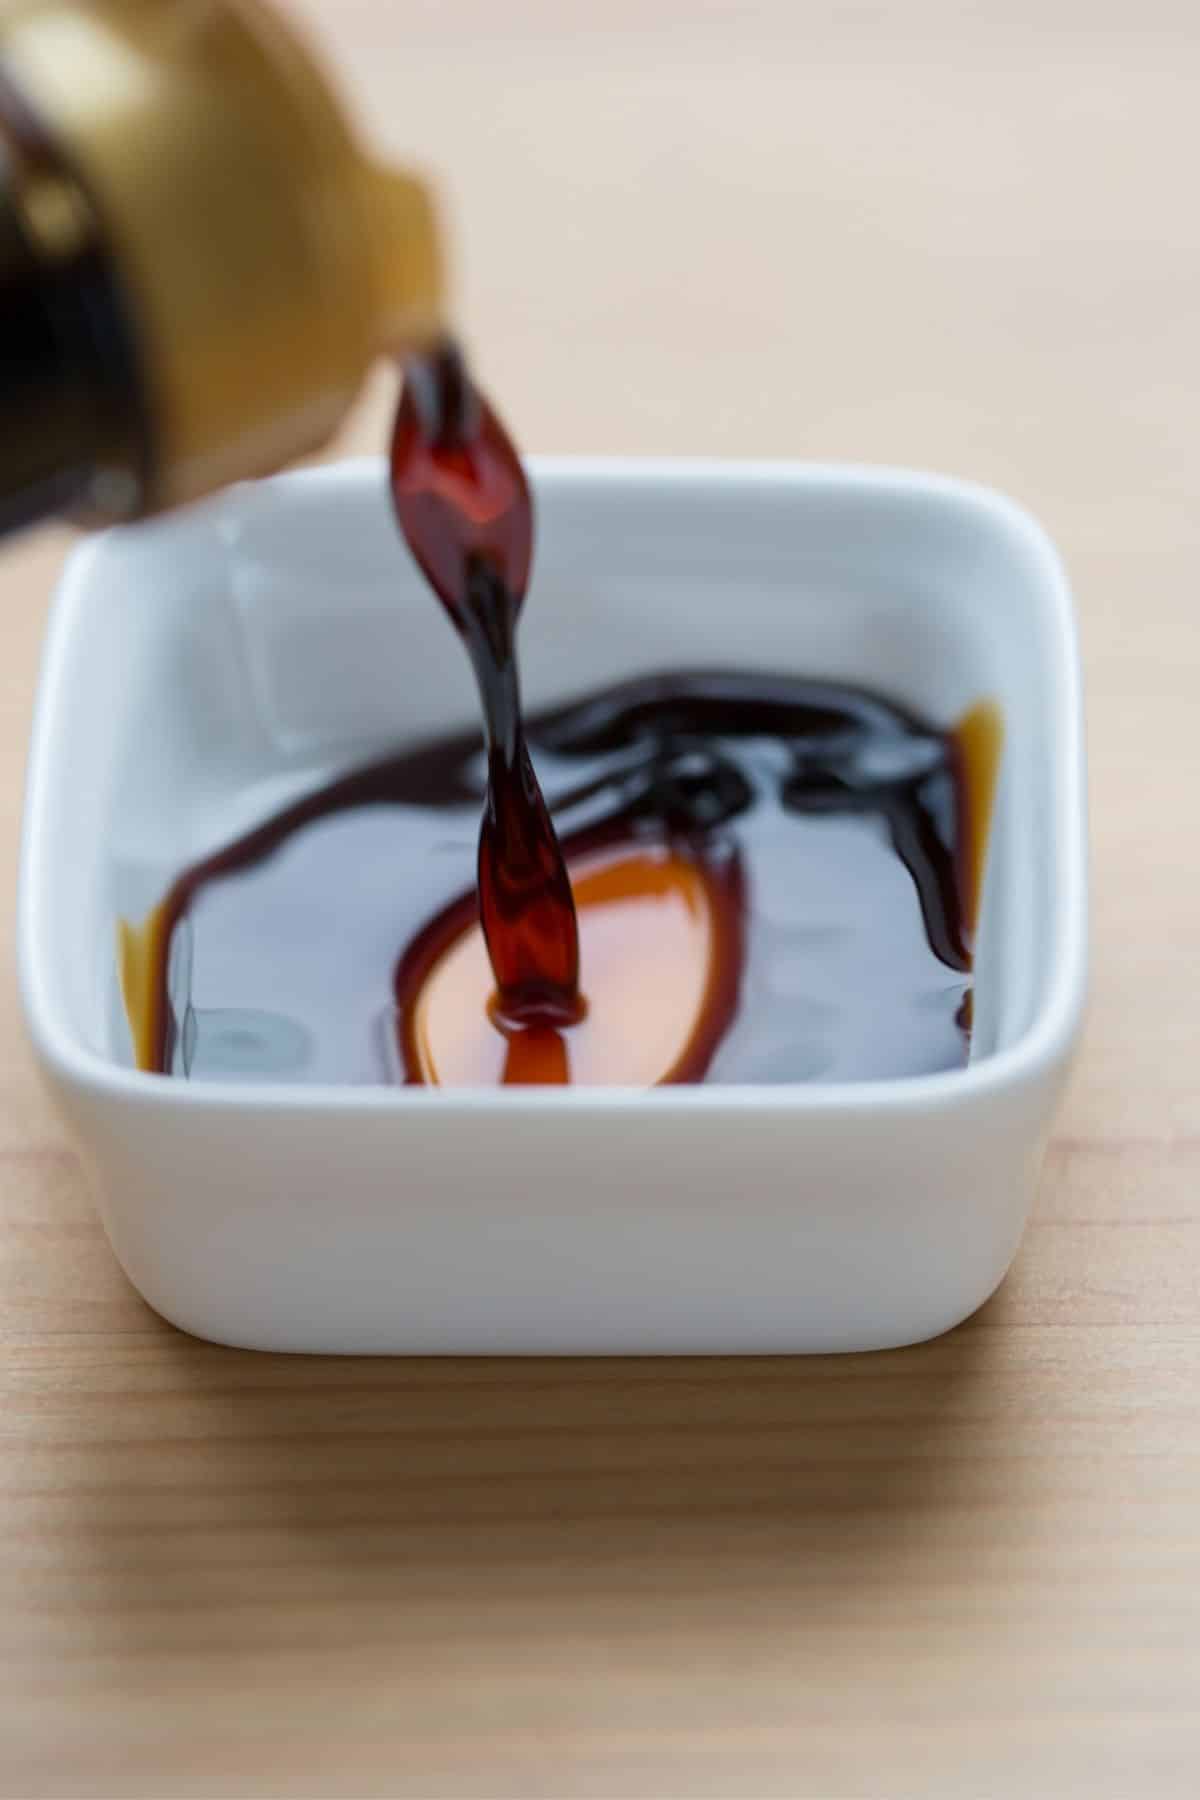 tamari soy sauce poured into a bowl.